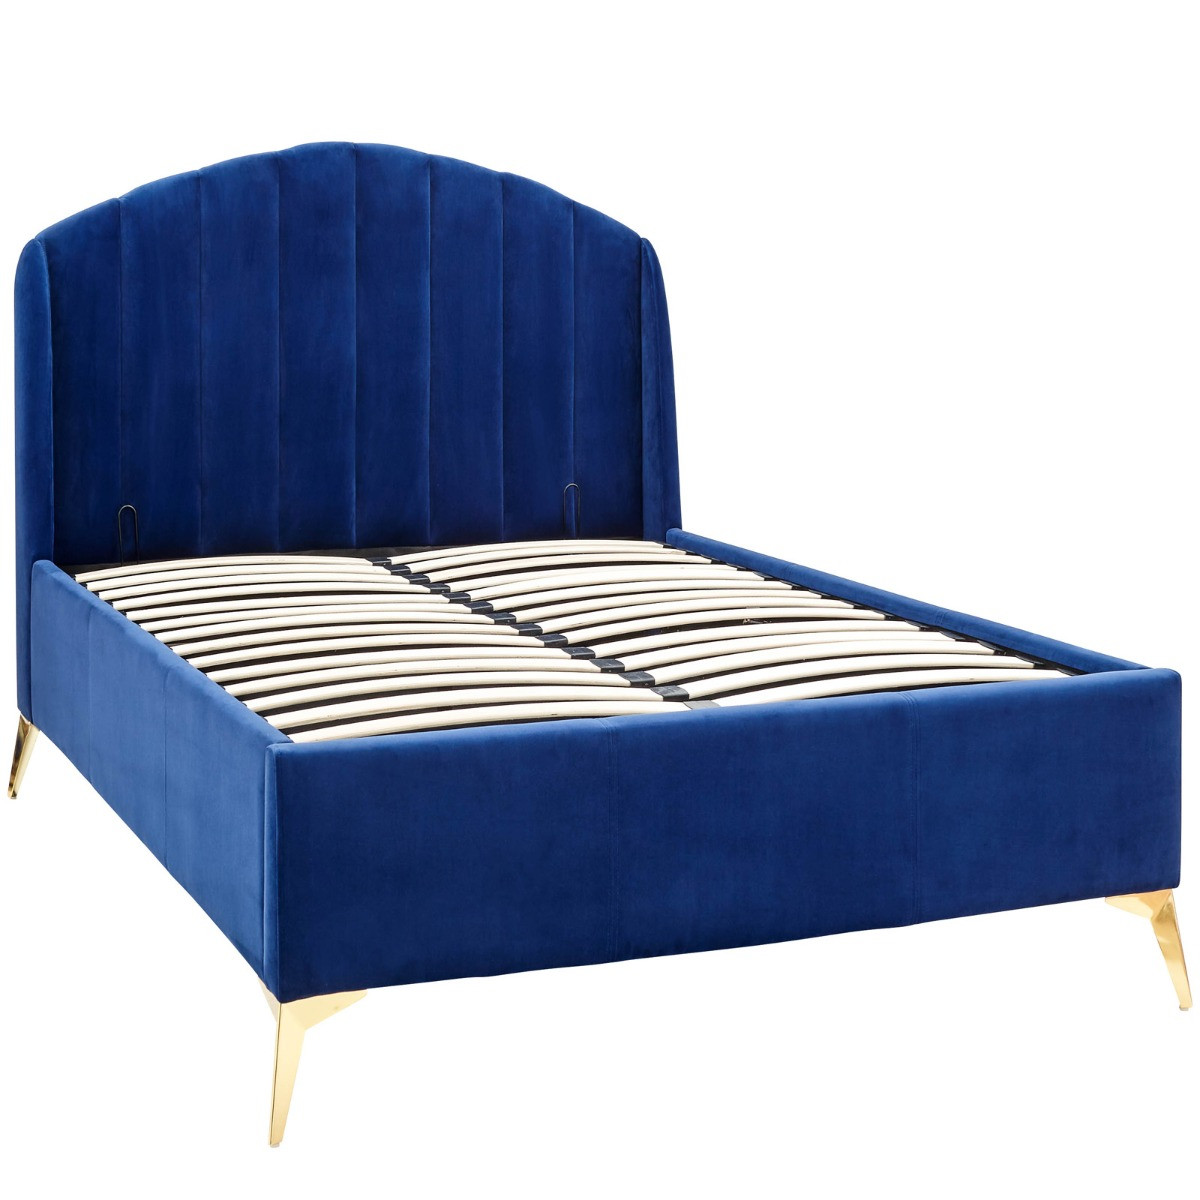 Pettine End Lift Ottoman Storage Bed - Royal Blue>